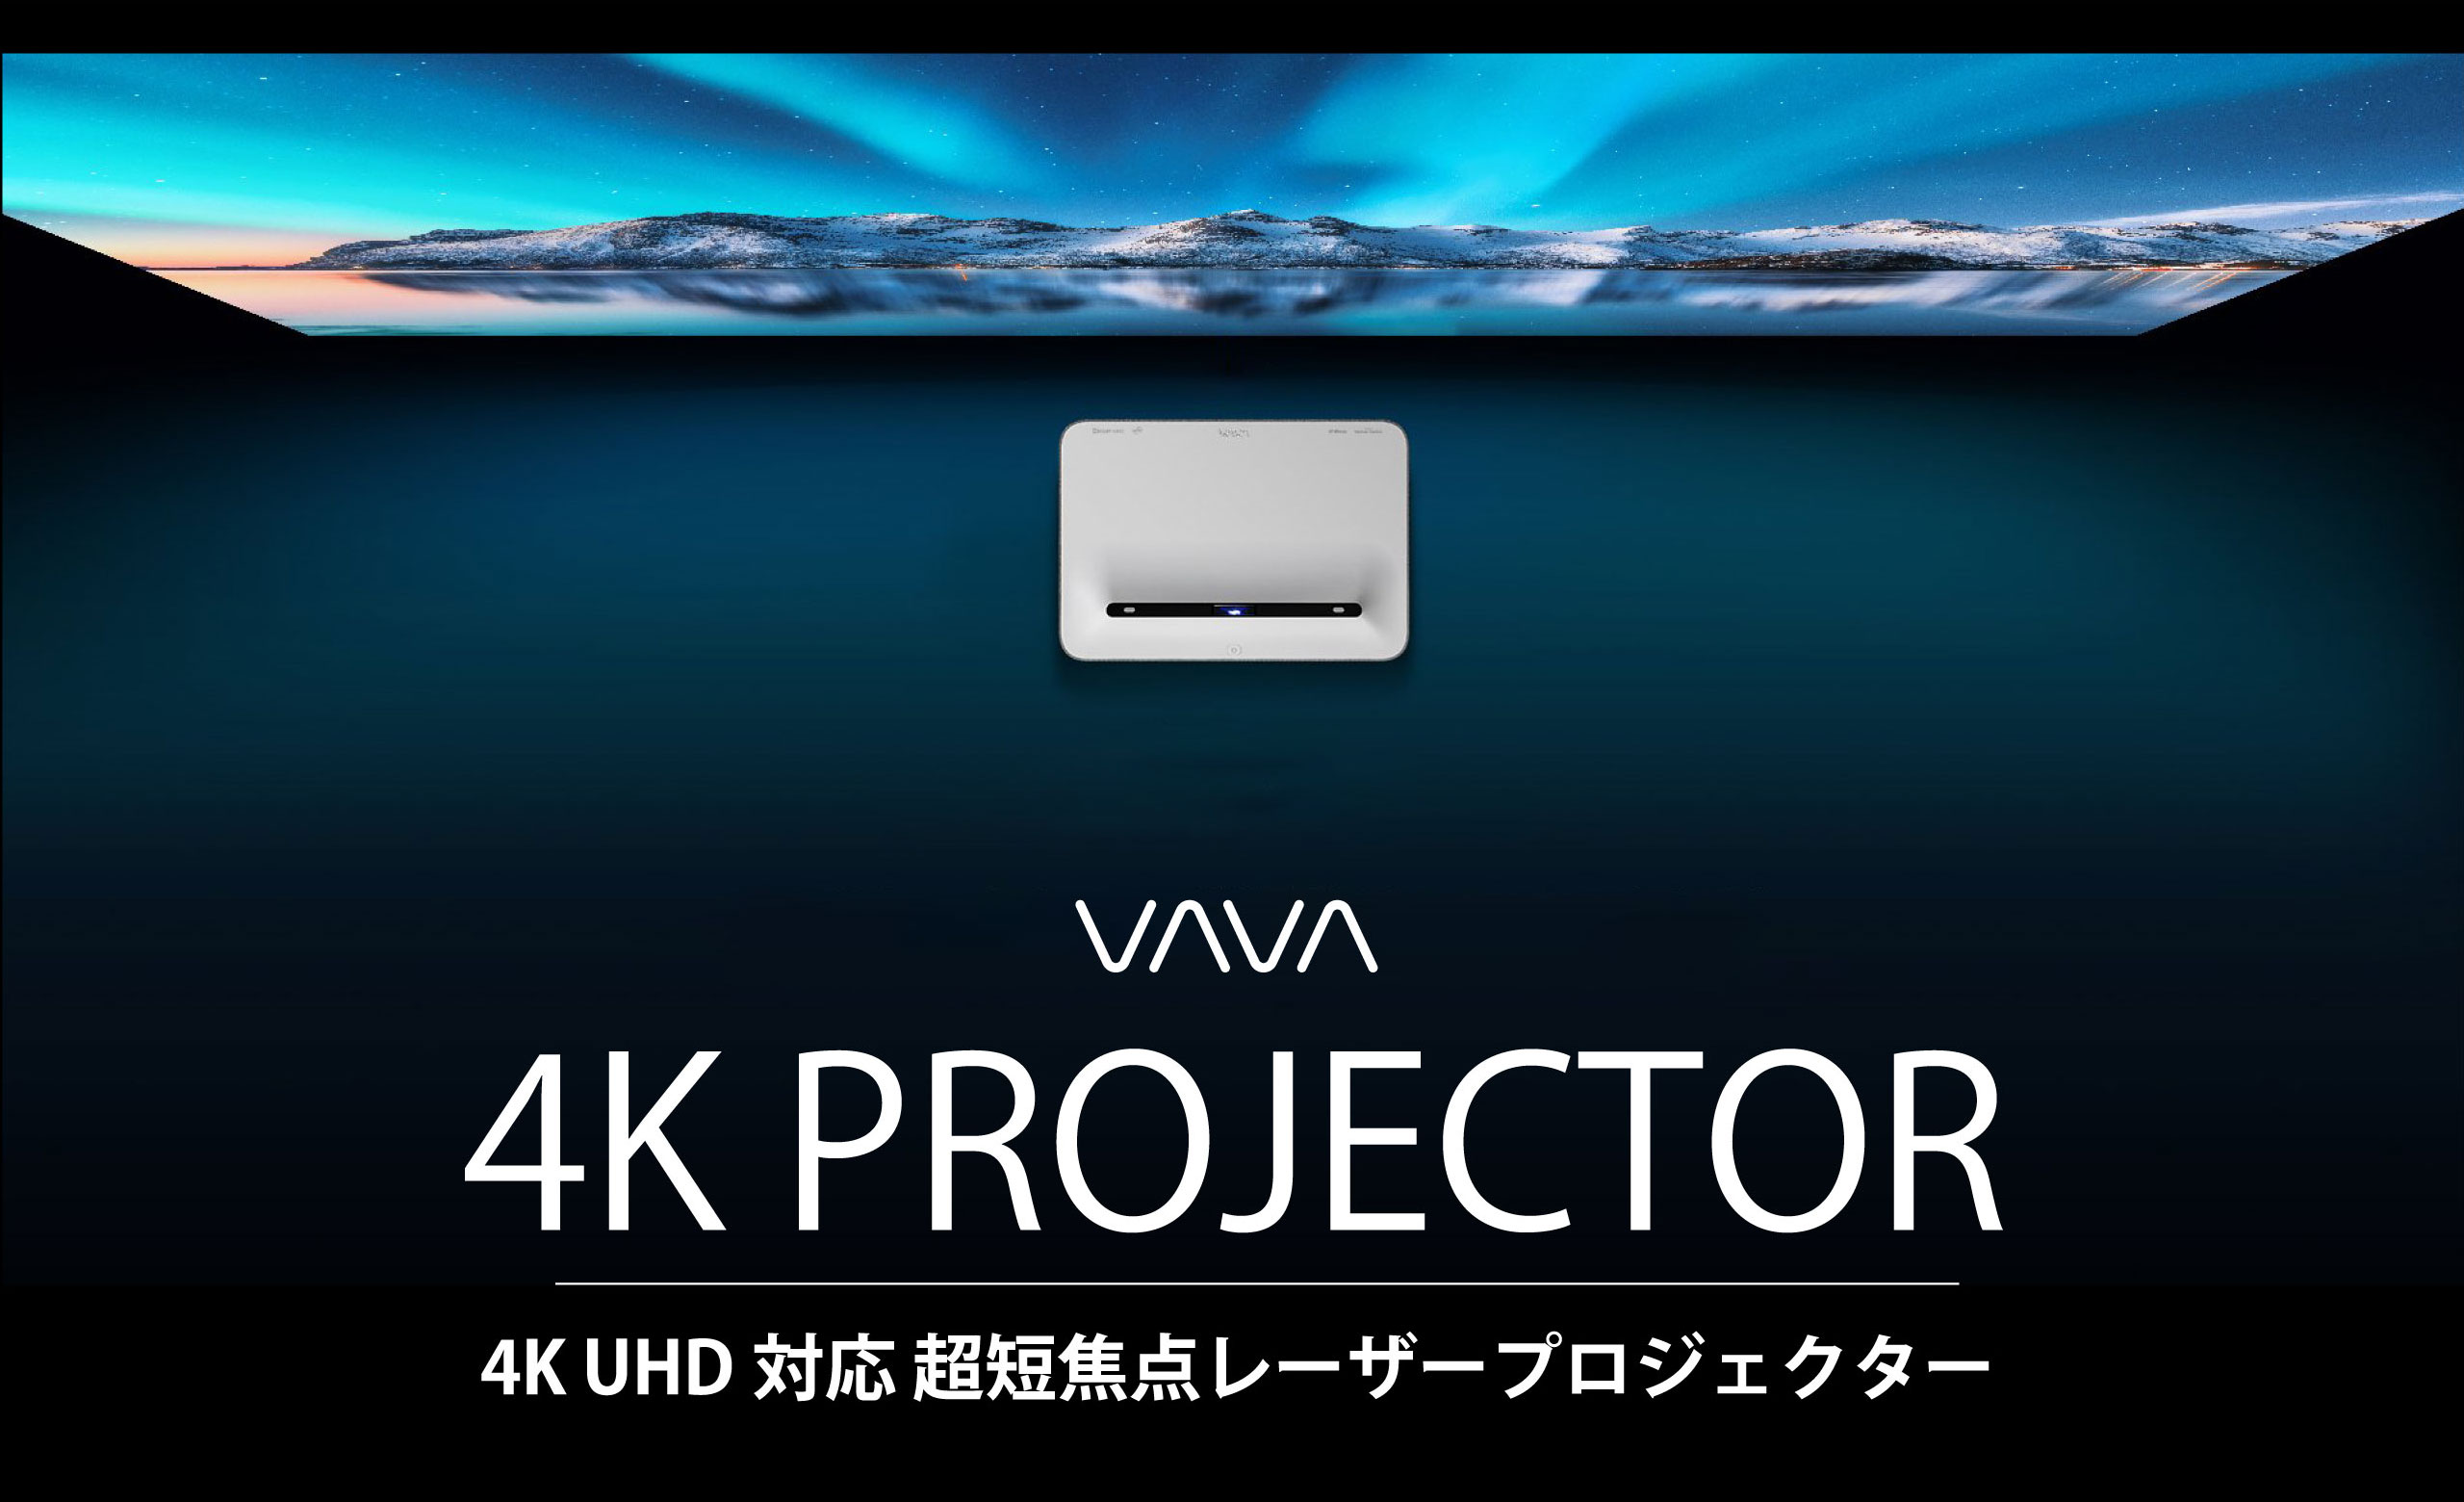 4K 超短焦点プロジェクター - VAVA 4K Ultra Short Throw Laser Projector